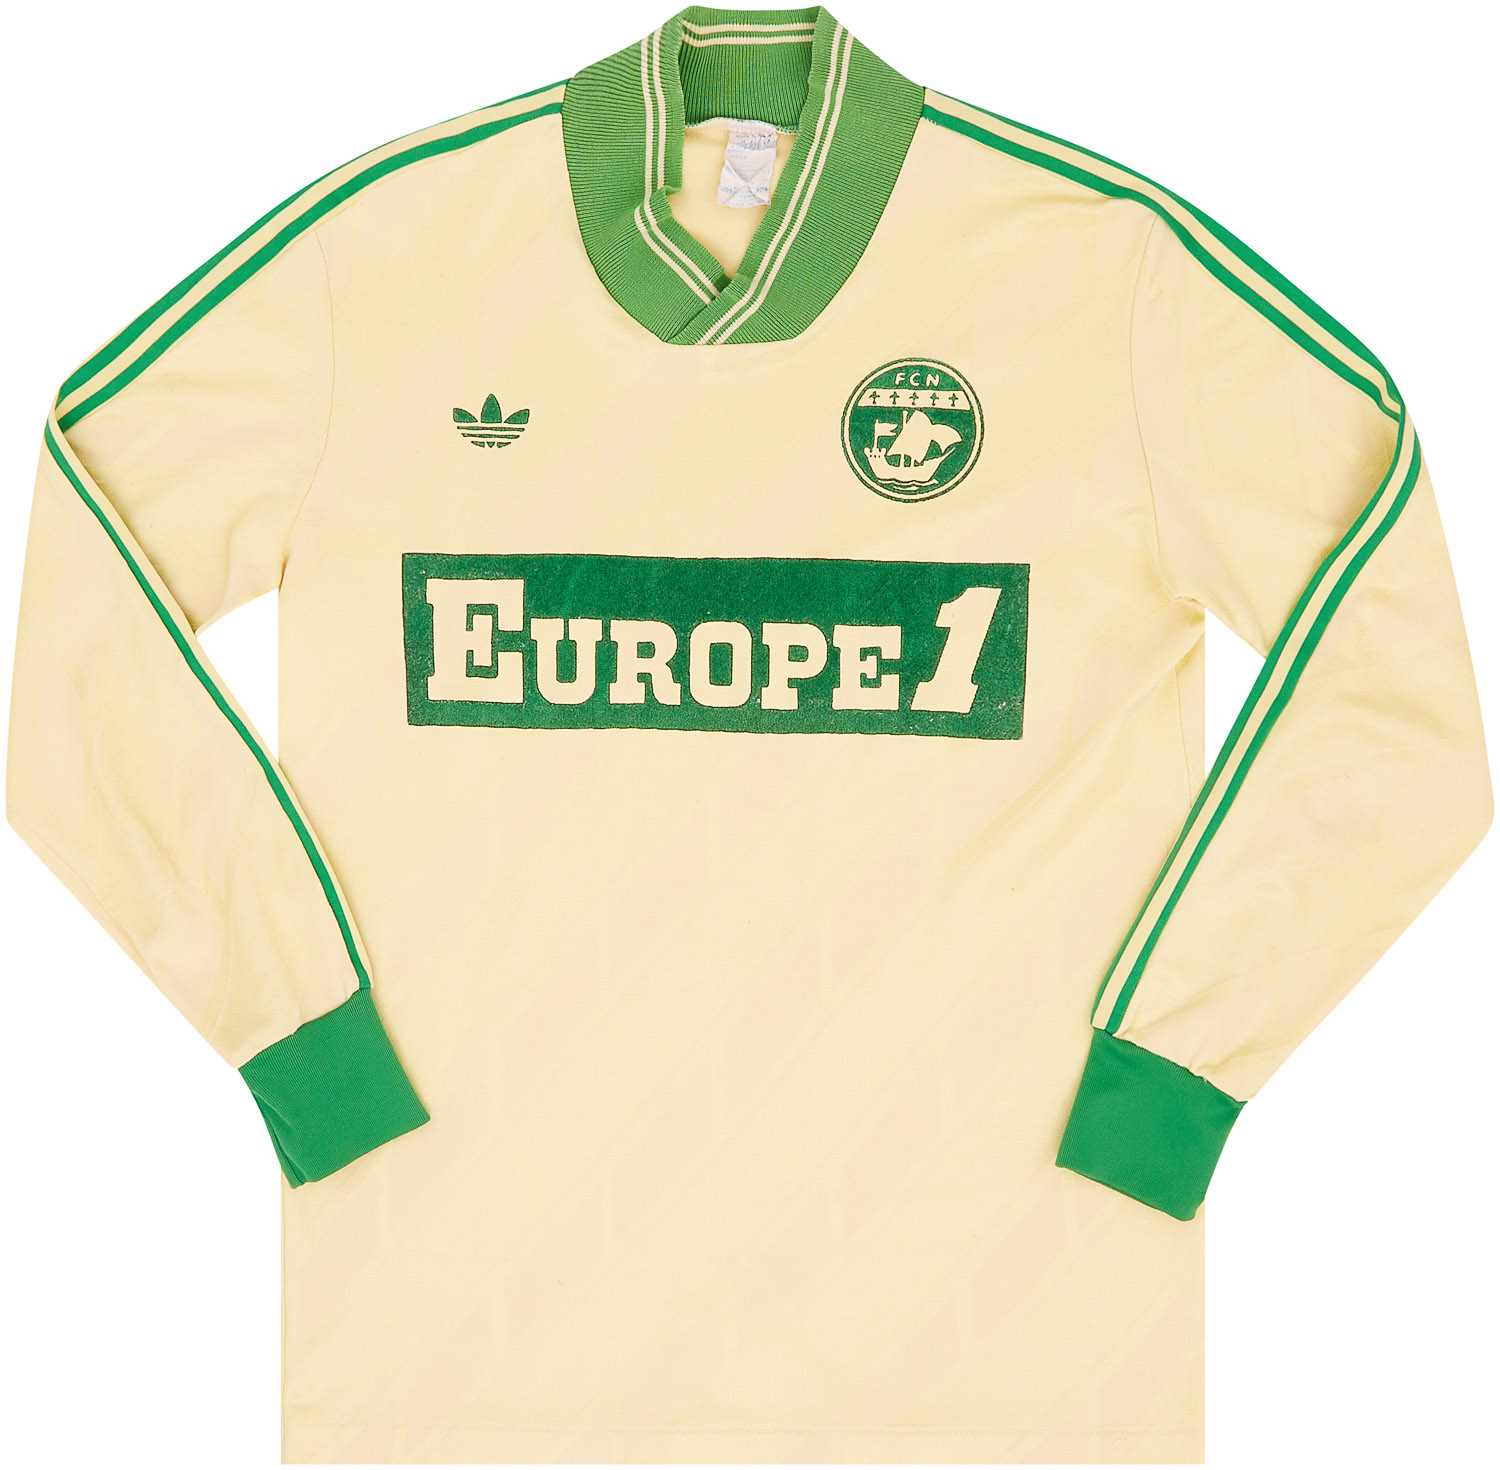 1987-88 Nantes Home Shirt - Very Good 6/10 - ()